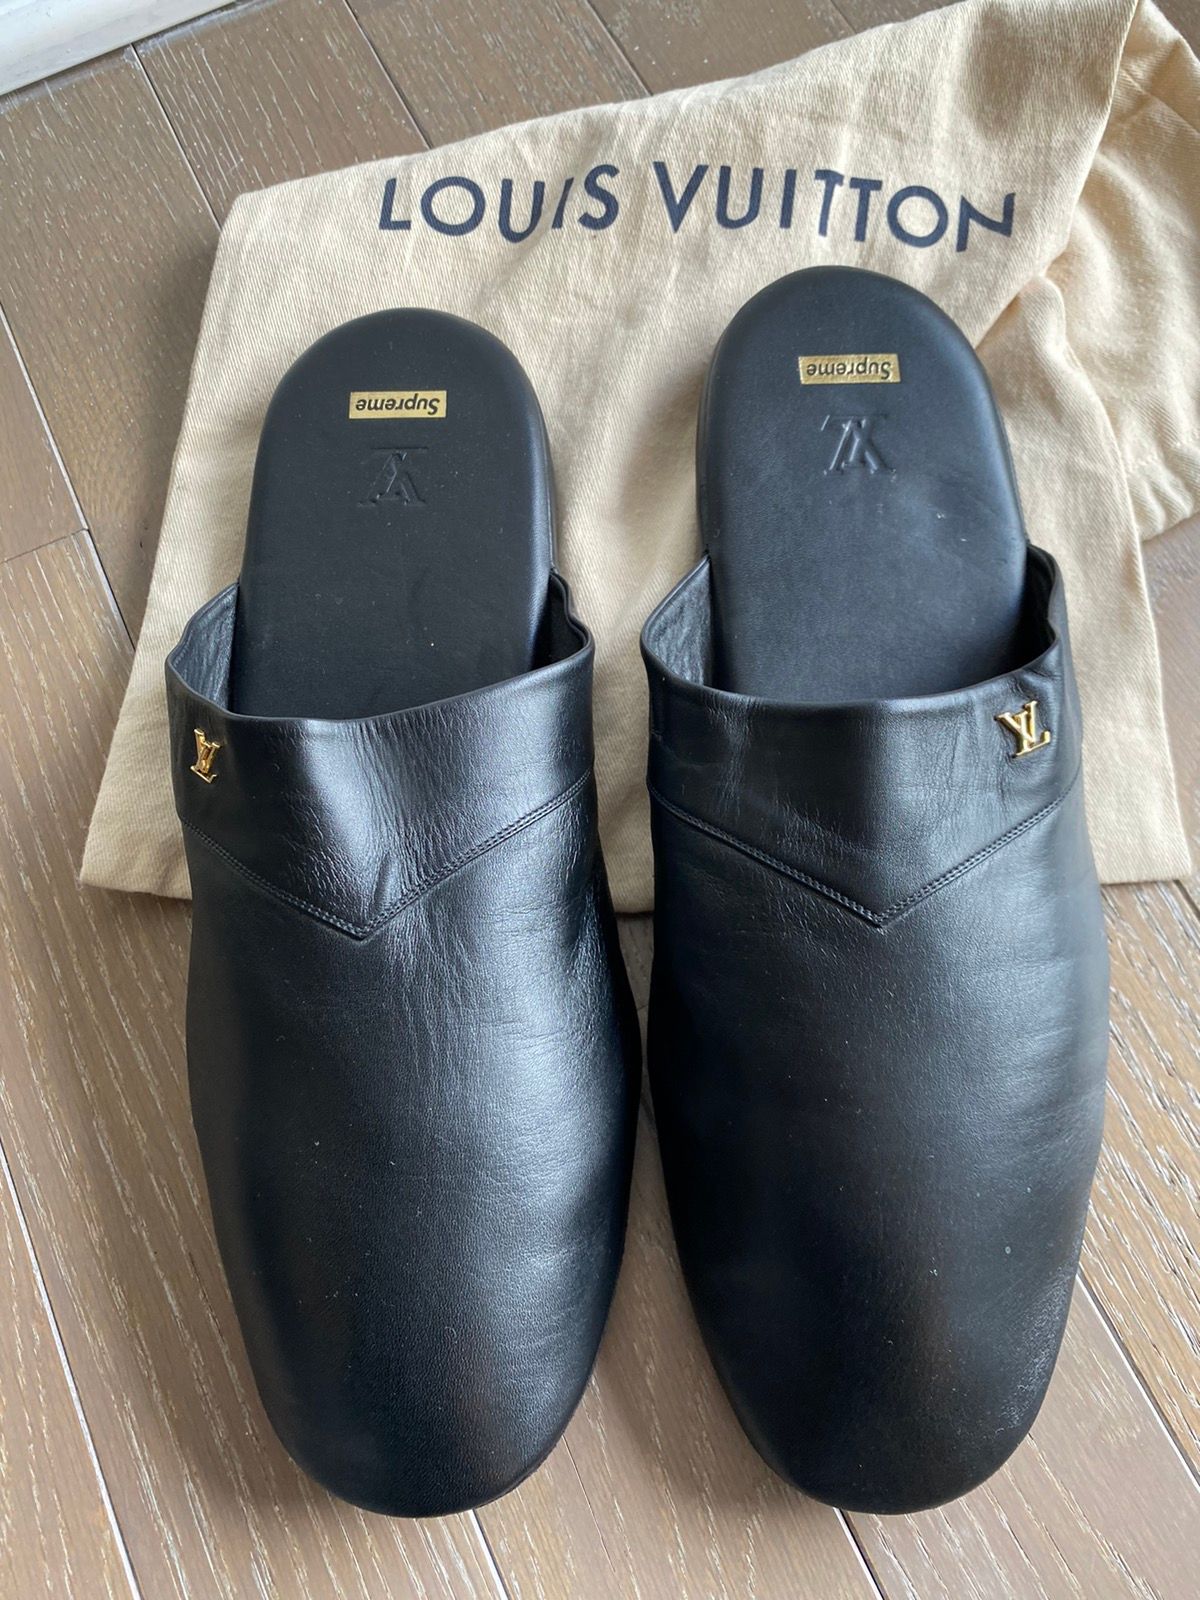 Louis Vuitton Supreme 2017 Hugh House Slippers